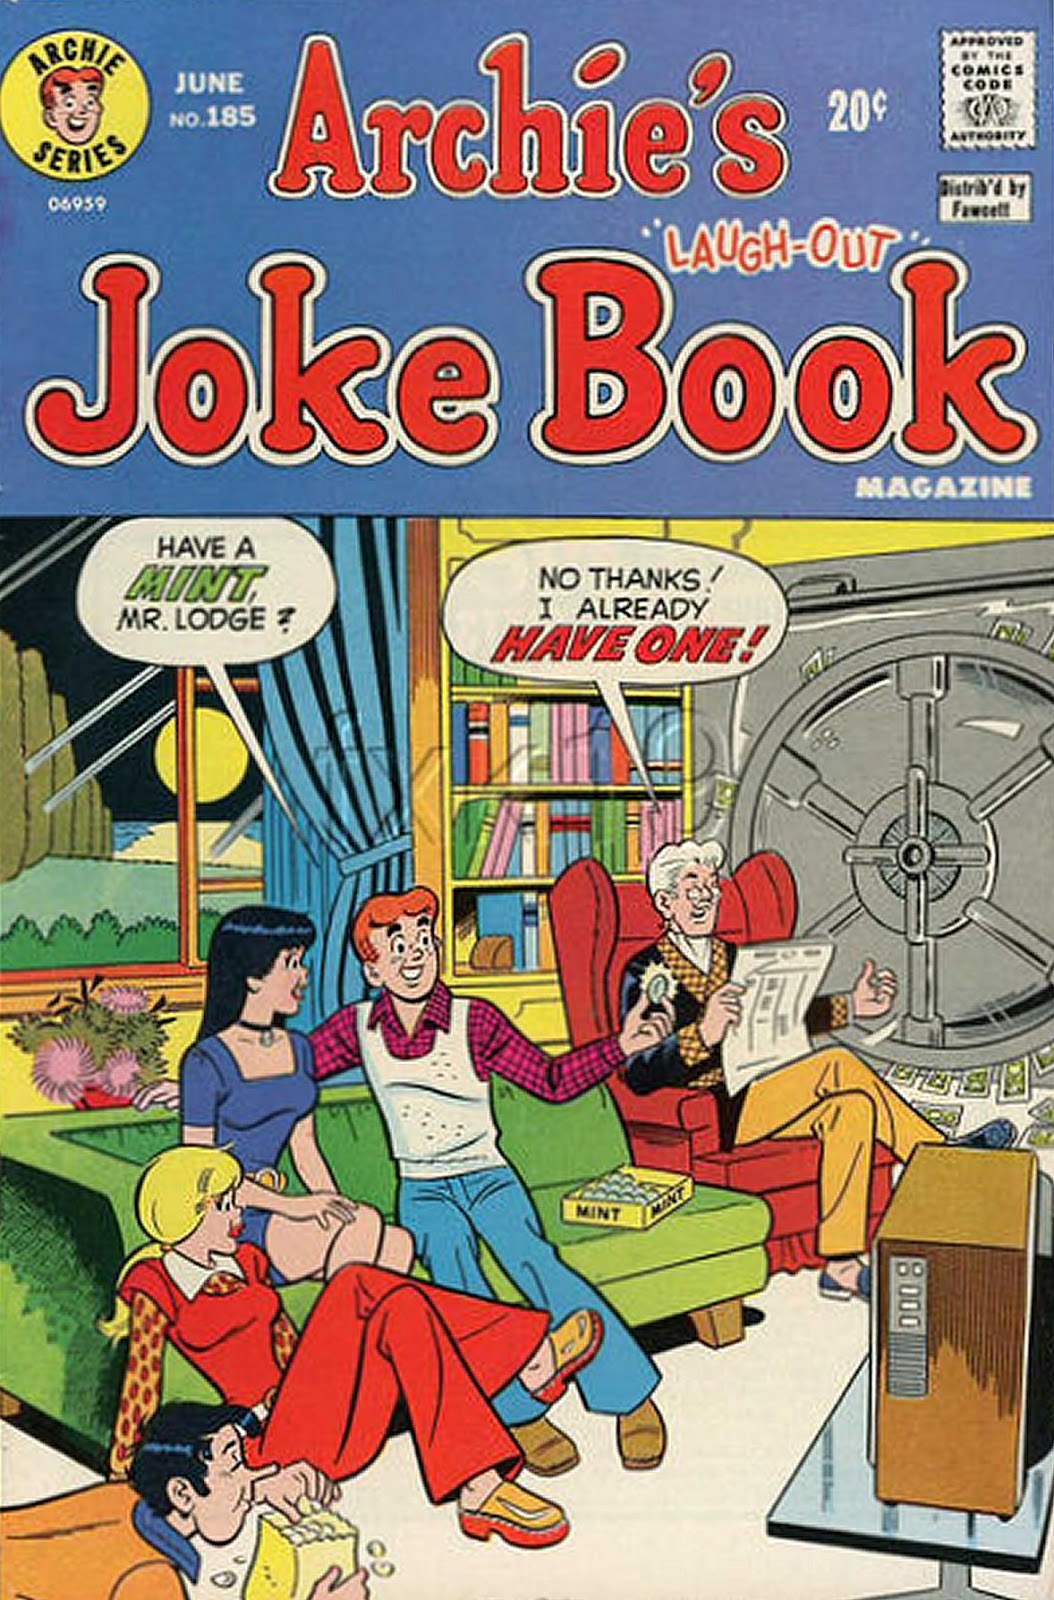 Archie's Joke Book Magazine issue 185 - Page 1